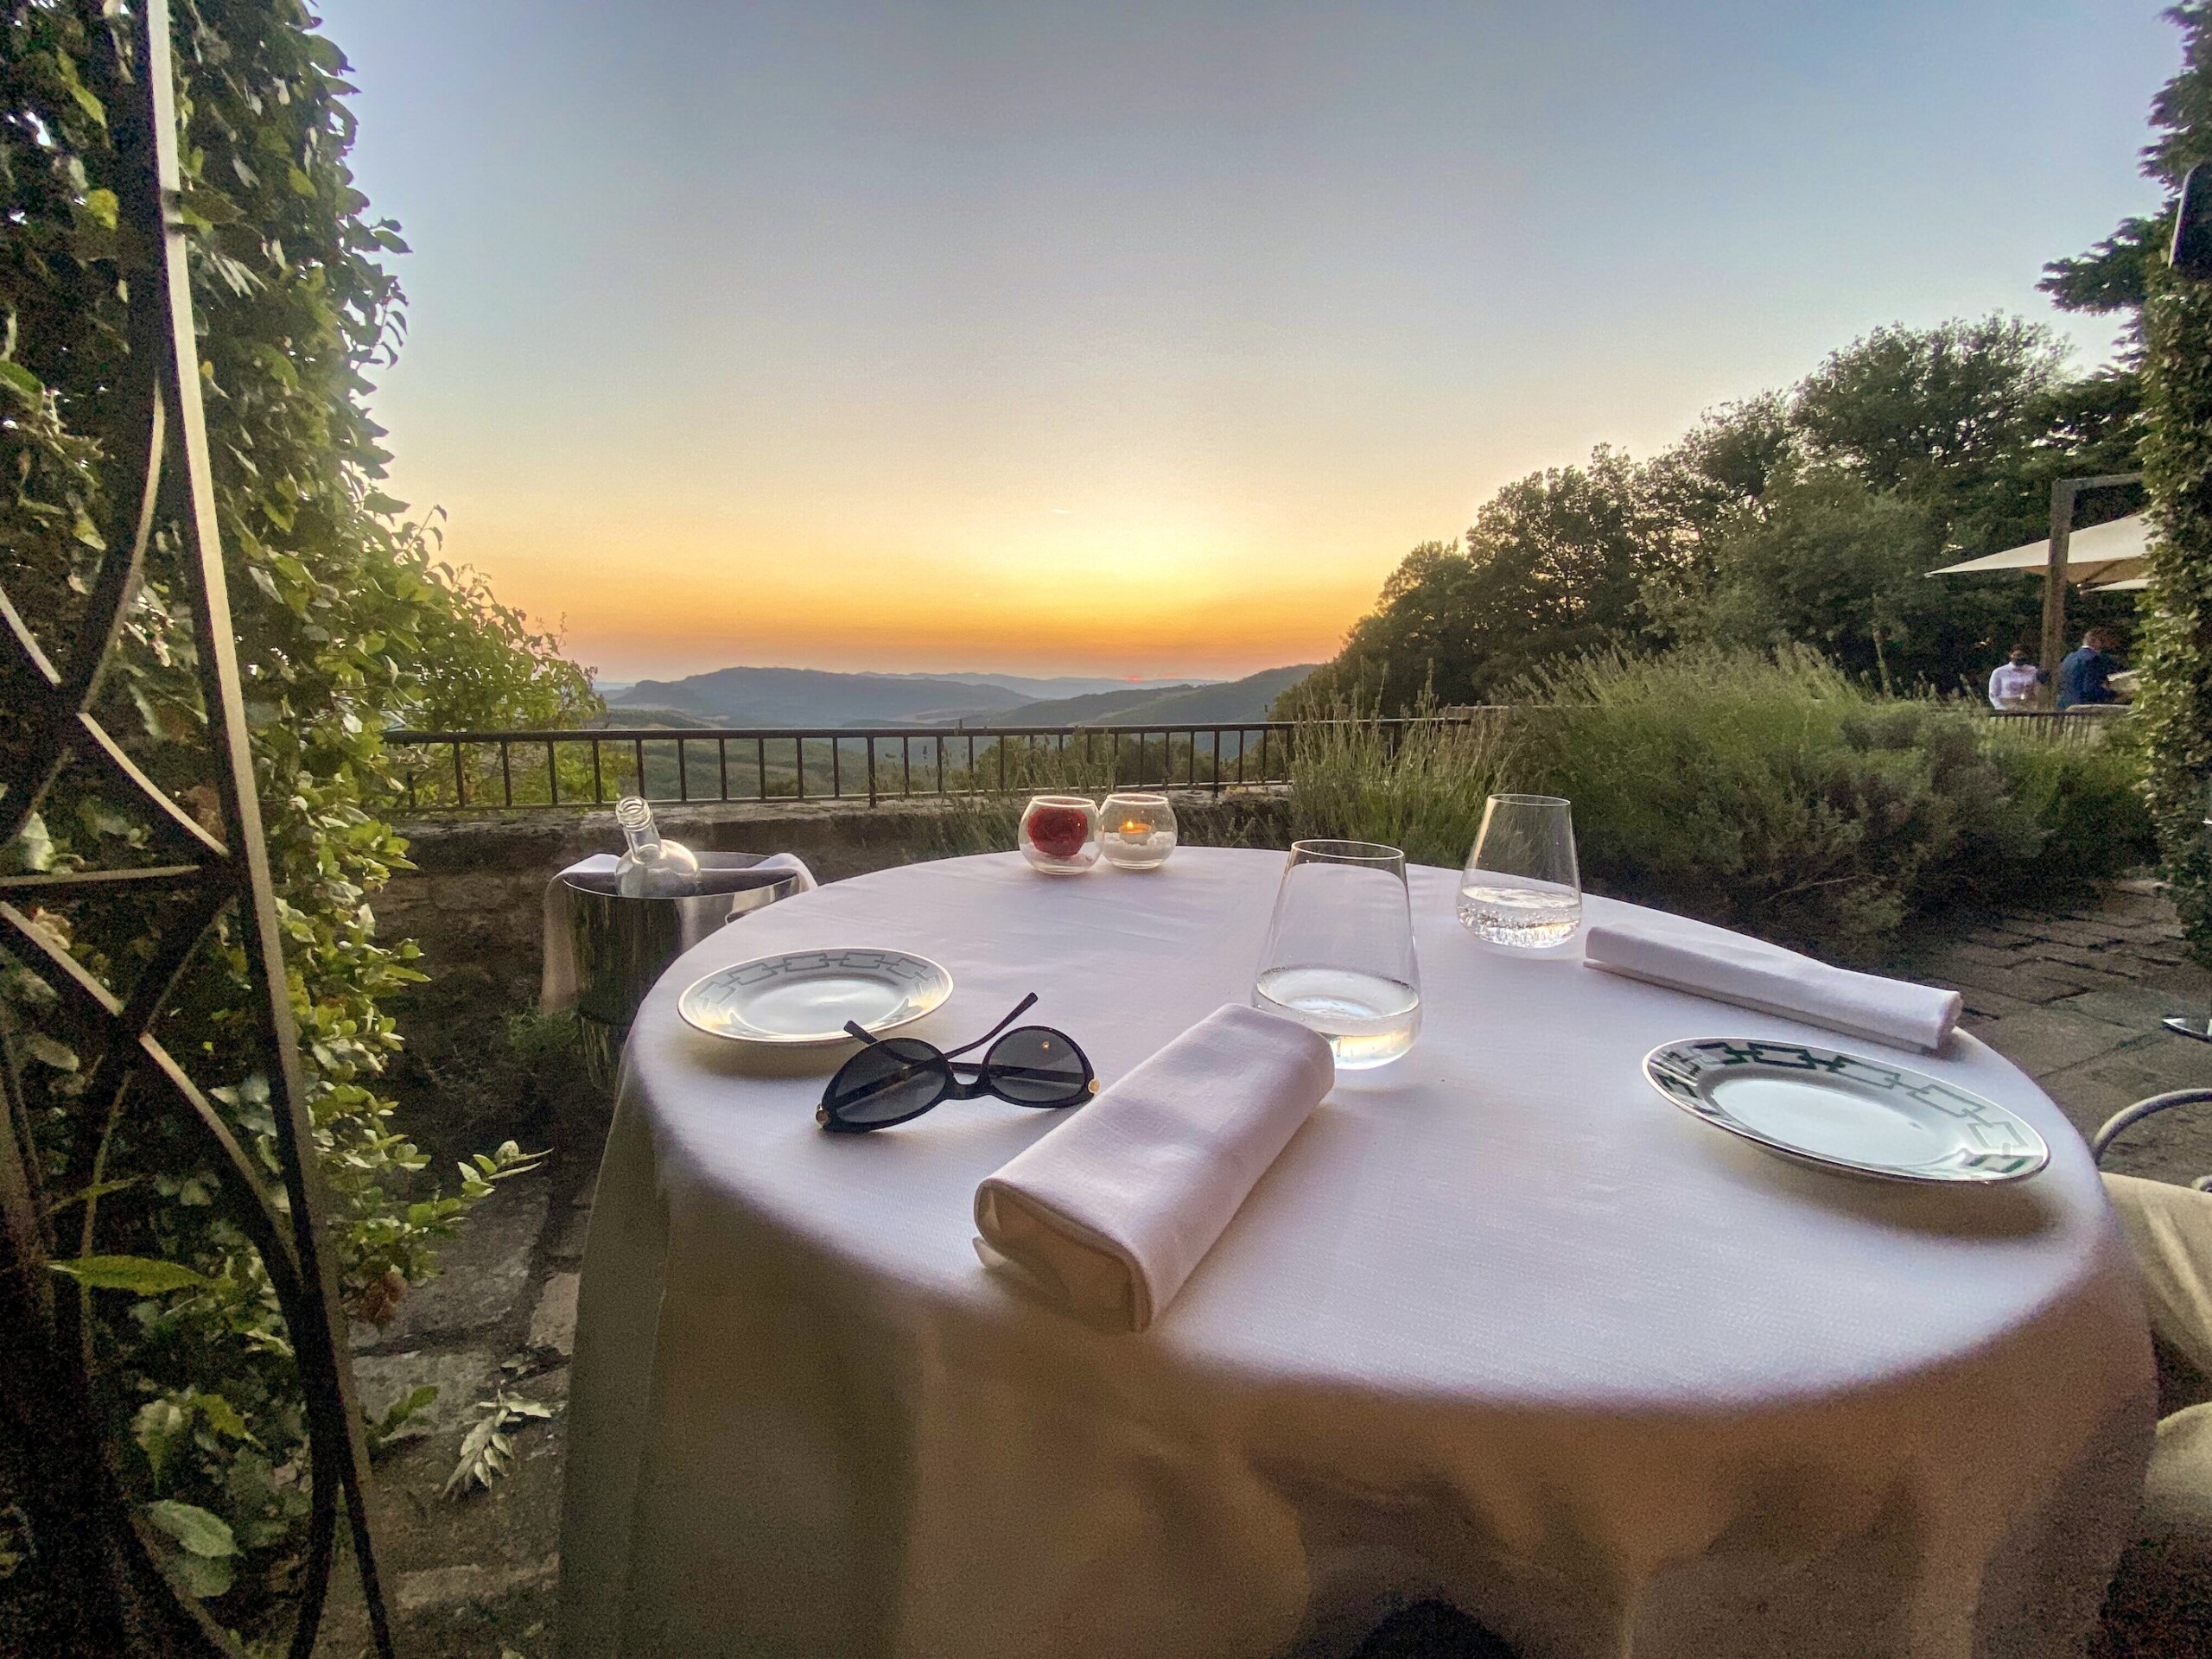 Borgo Pignano Main Restaurant Table at Sunset